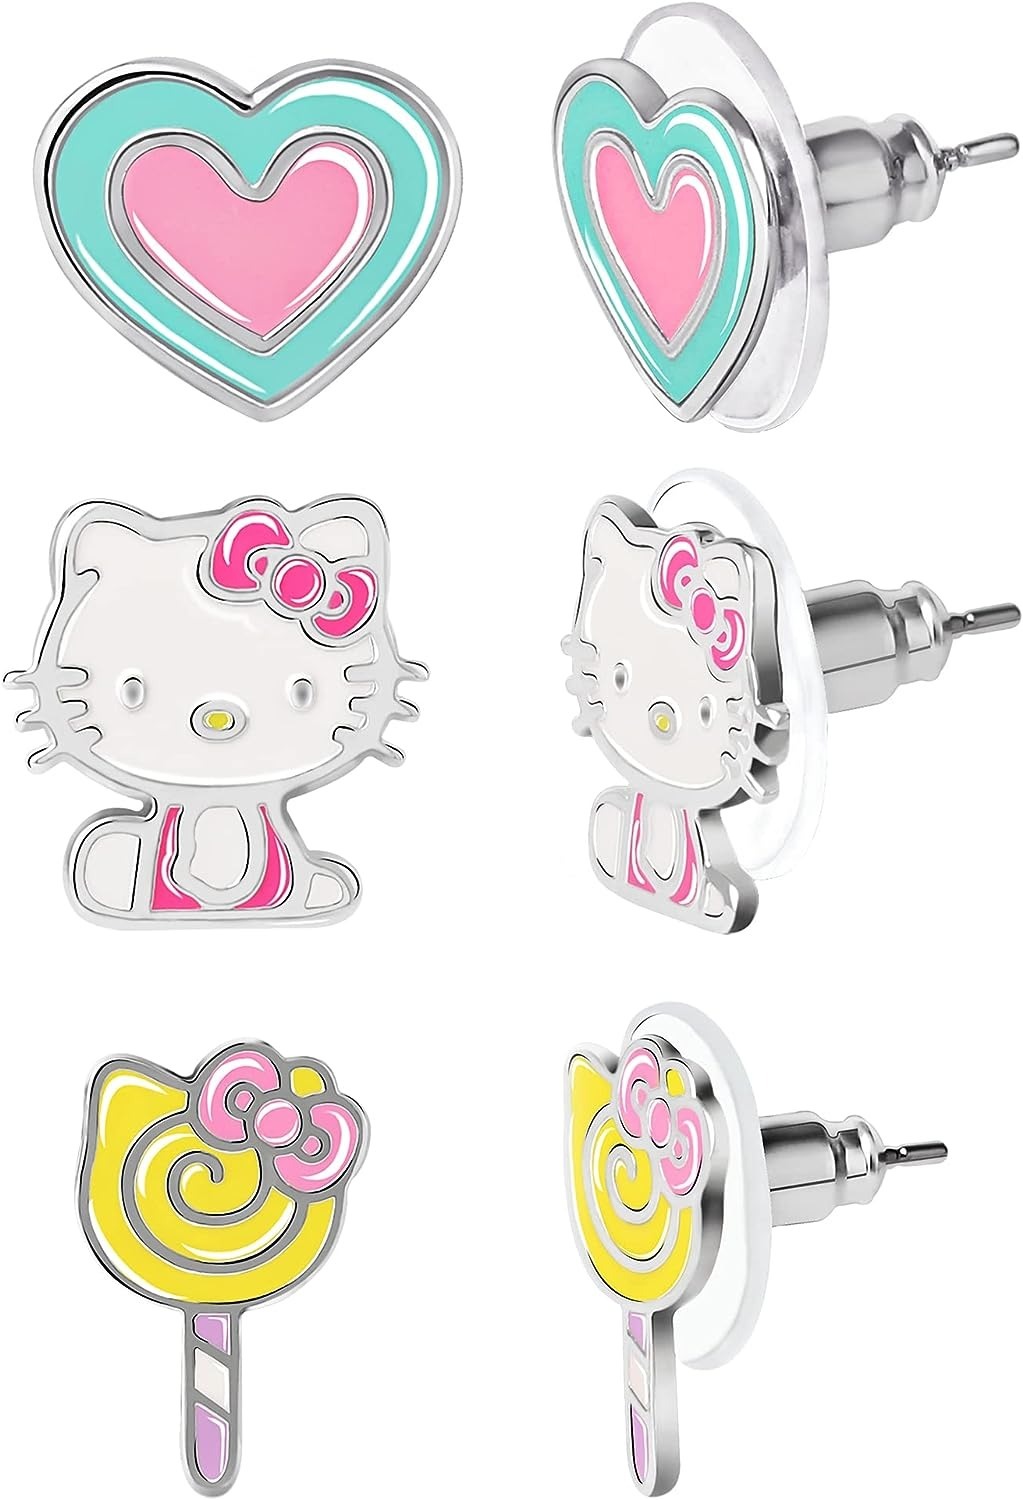 3 PC Sanrio Hello Kitty Girls Stud Earrings Set $12.99 + Free Shipping w/ Prime